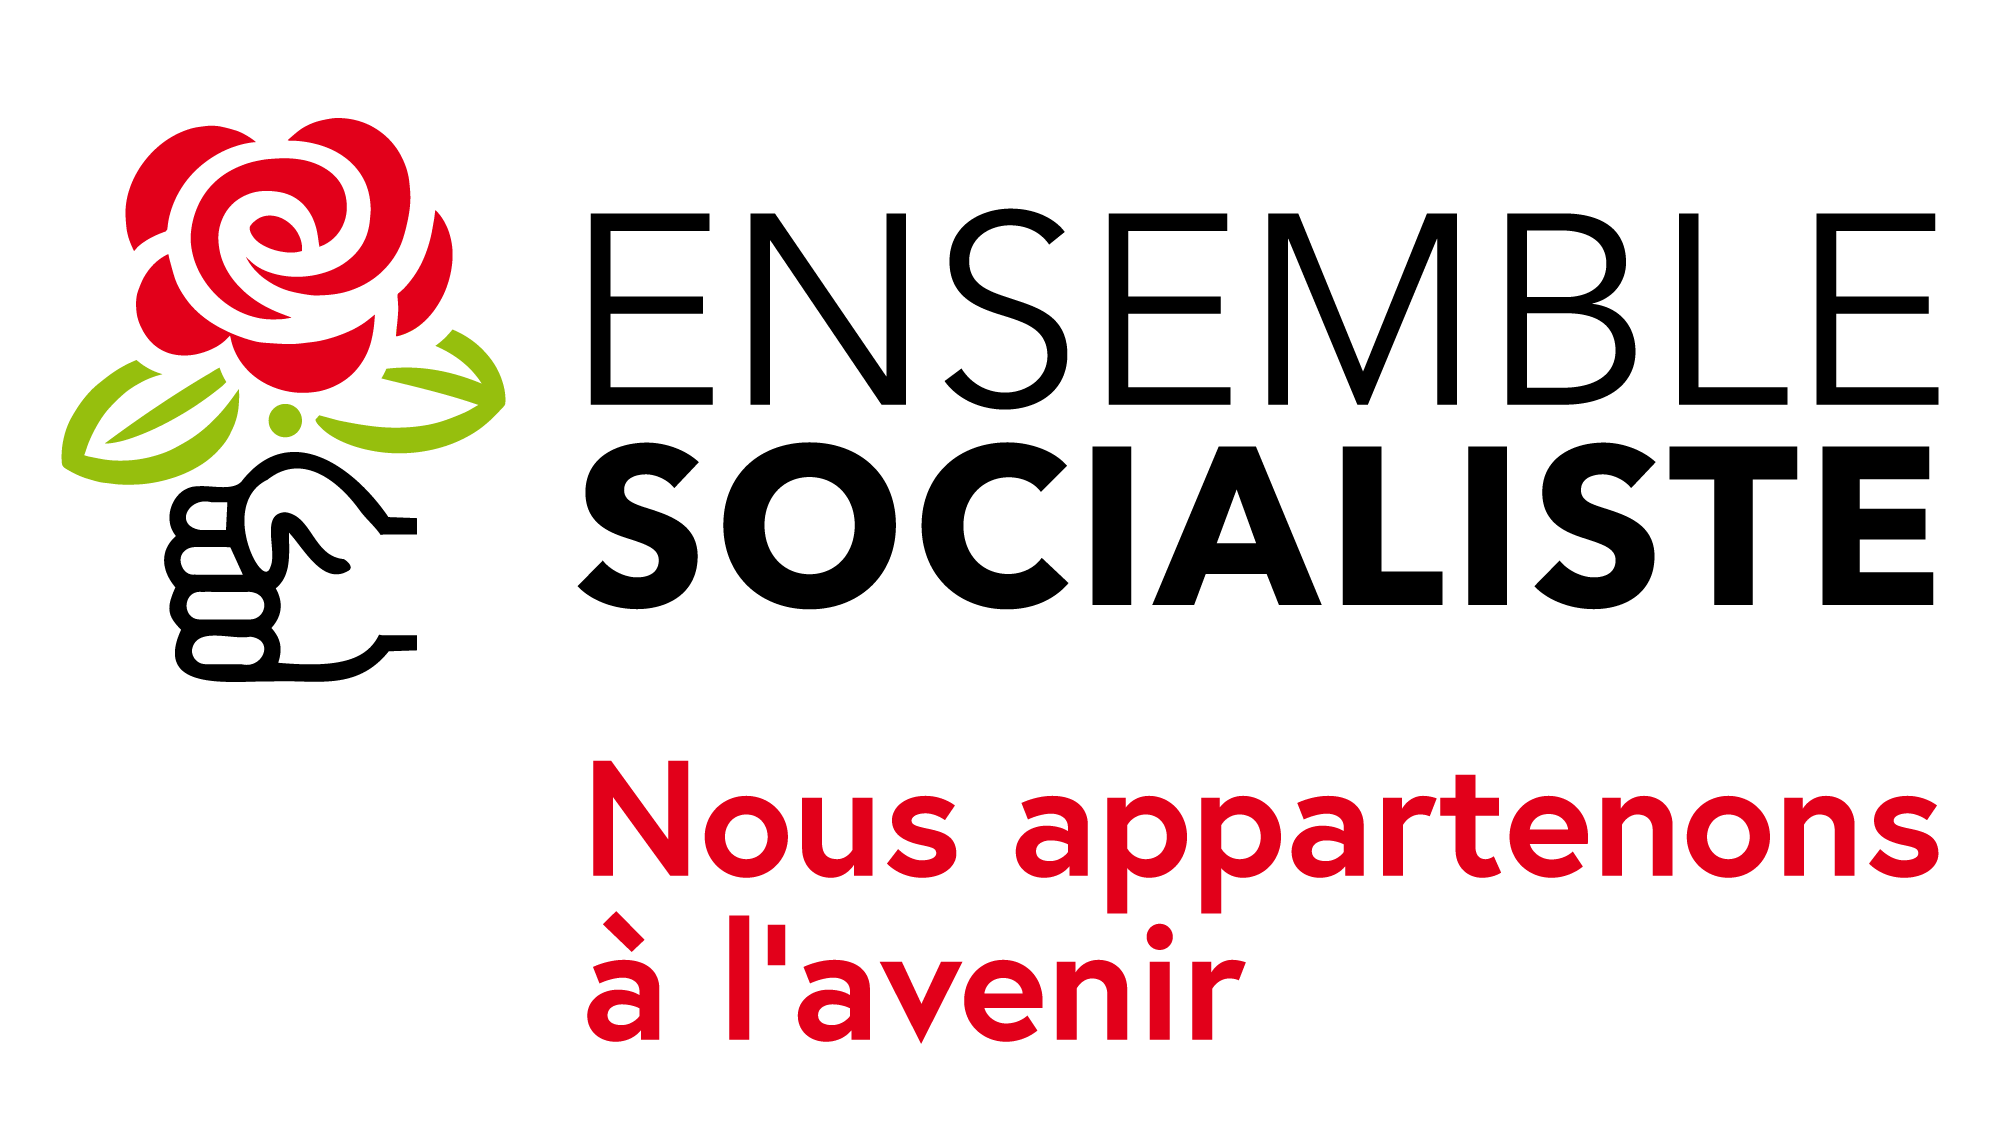 Ensemble Socialiste